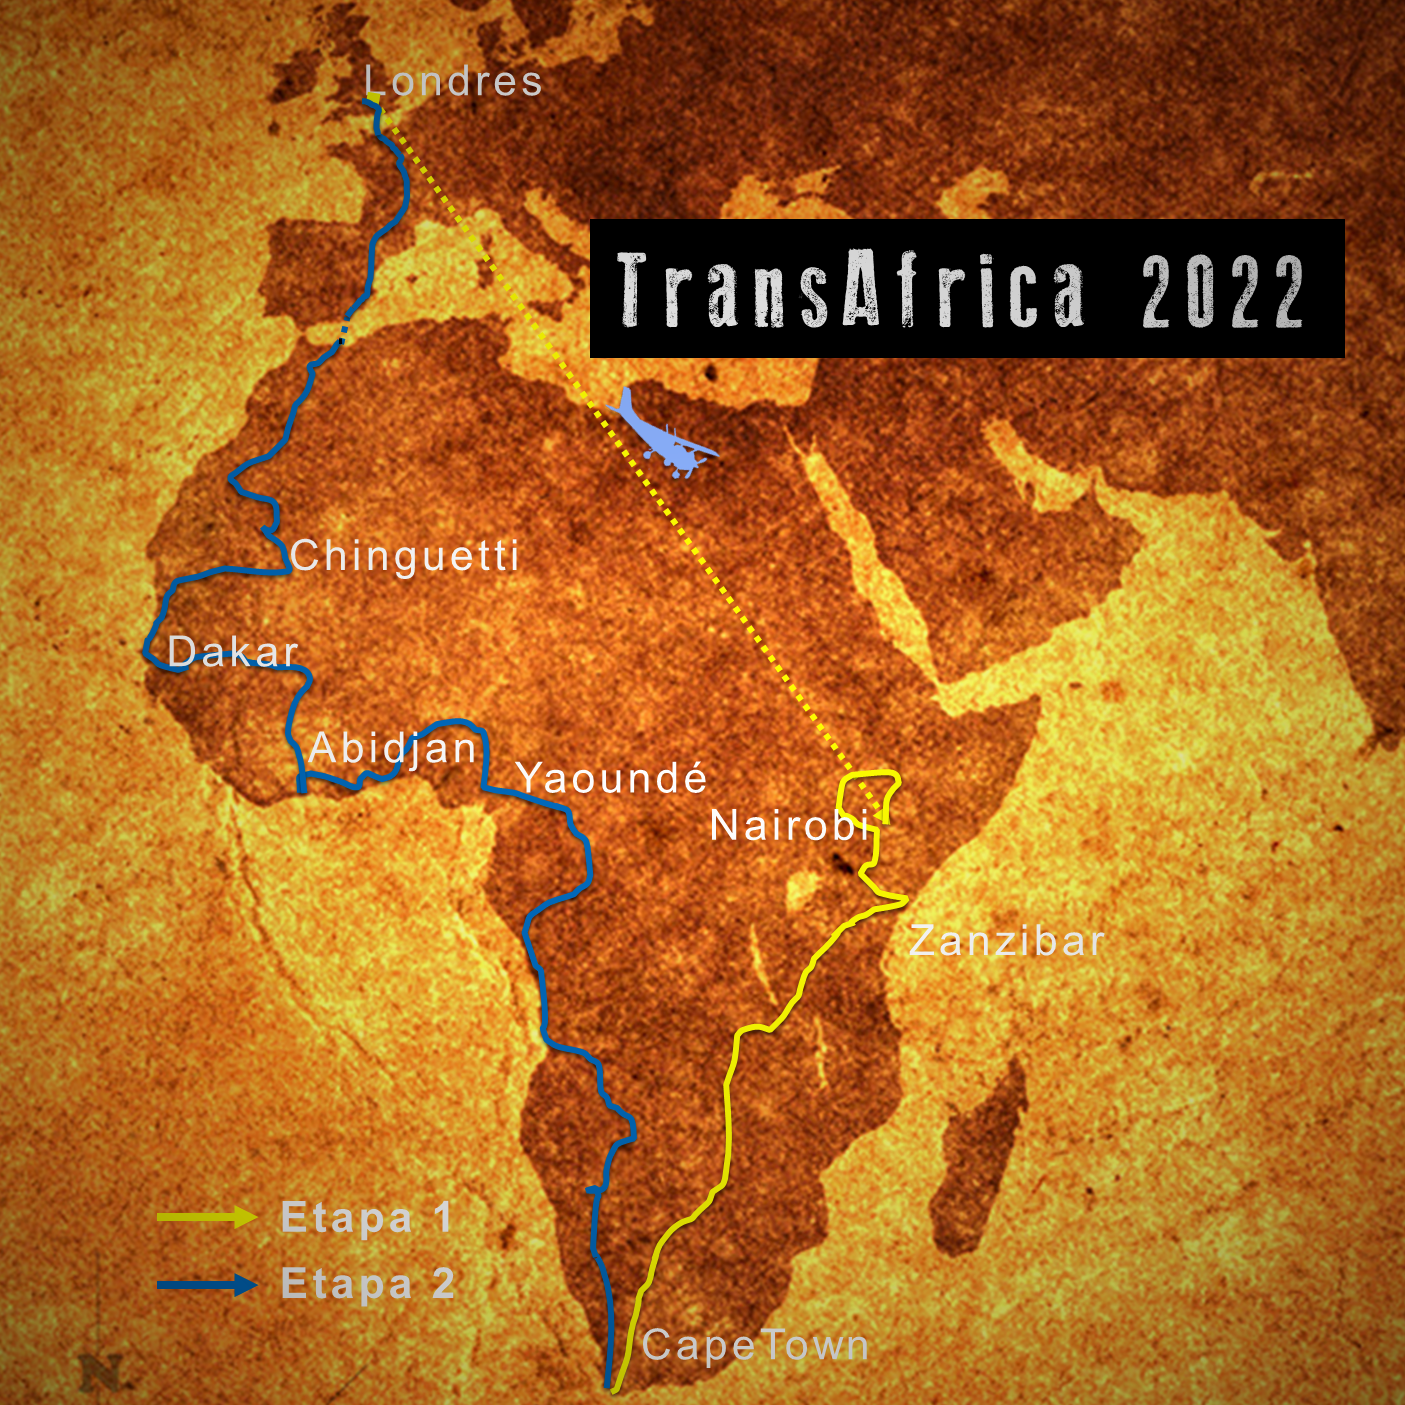 TransAfrica 2022